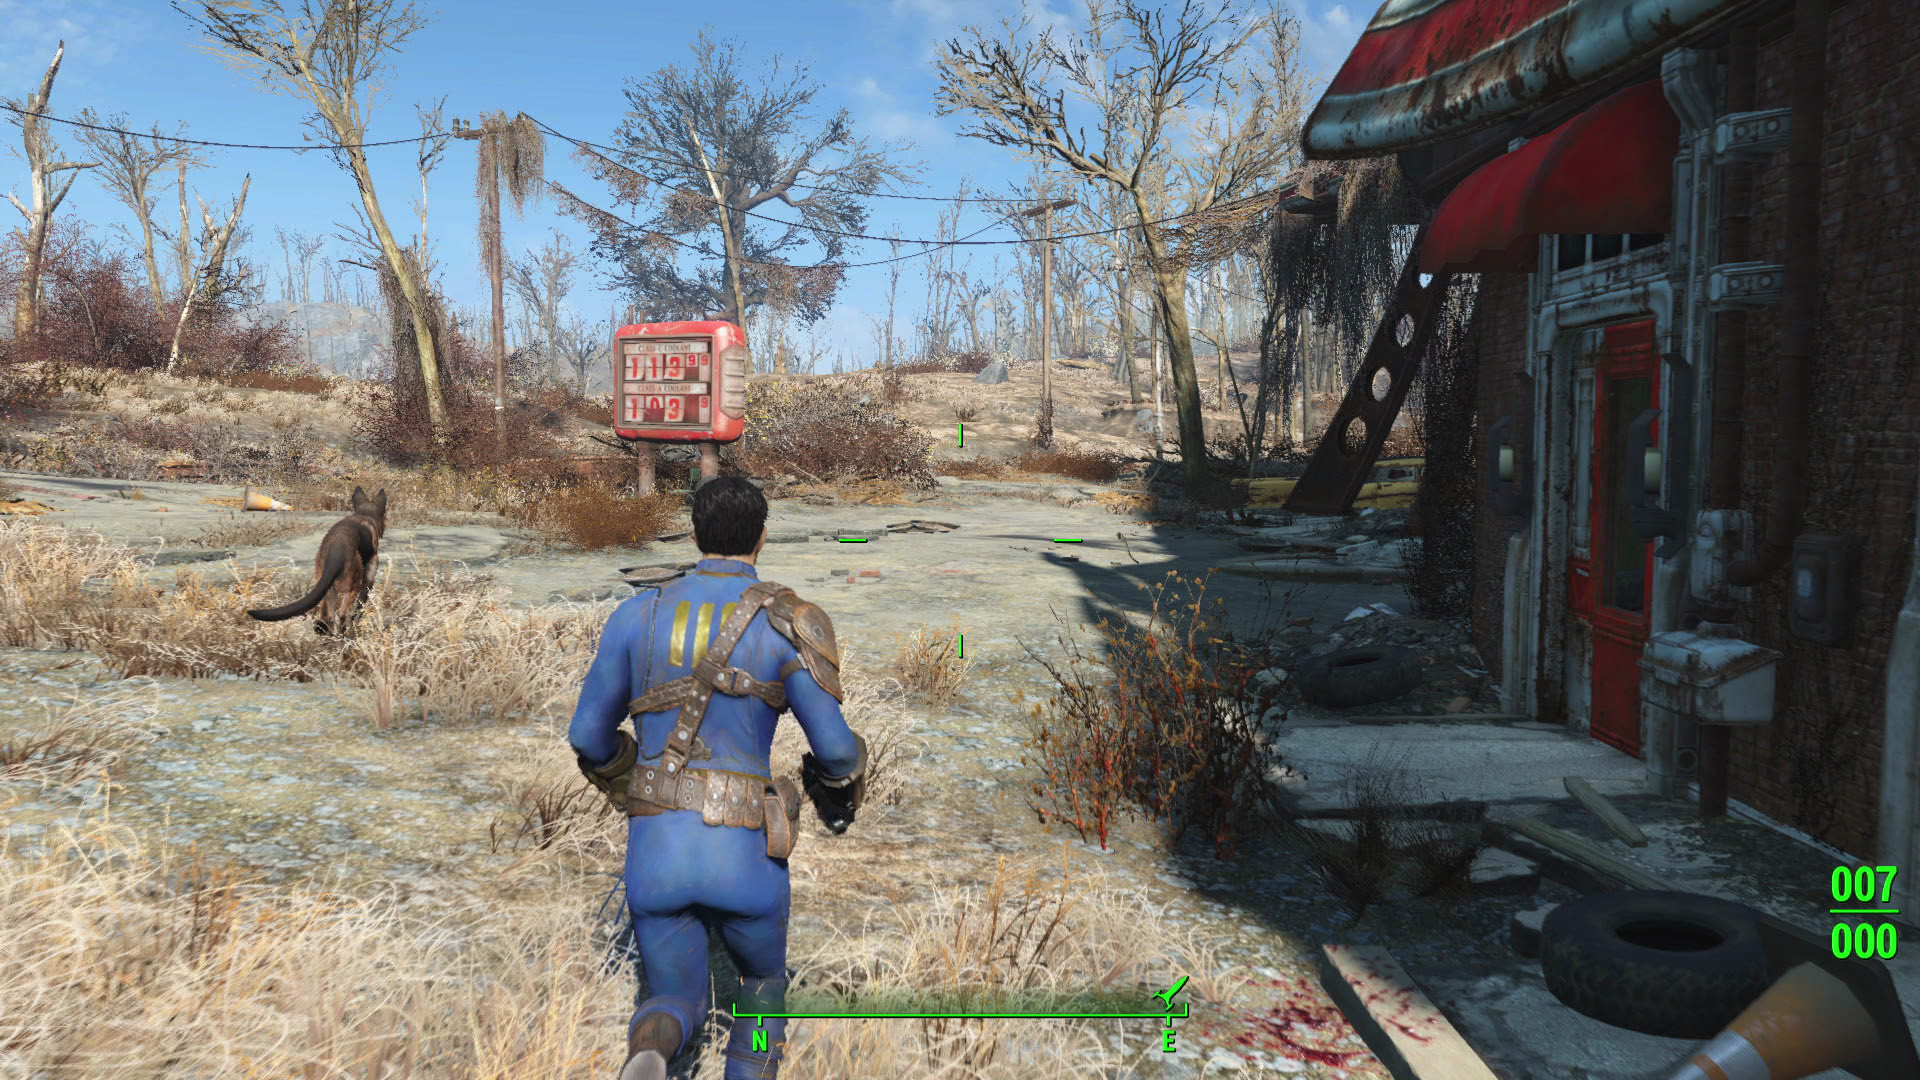 Media asset in full size related to 3dfxzone.it news item entitled as follows: Bethesda svela scene di gioco inedite di Fallout 4 con la reporter Piper | Image Name: news23226_Fallout-4-Screenshot_7.jpg